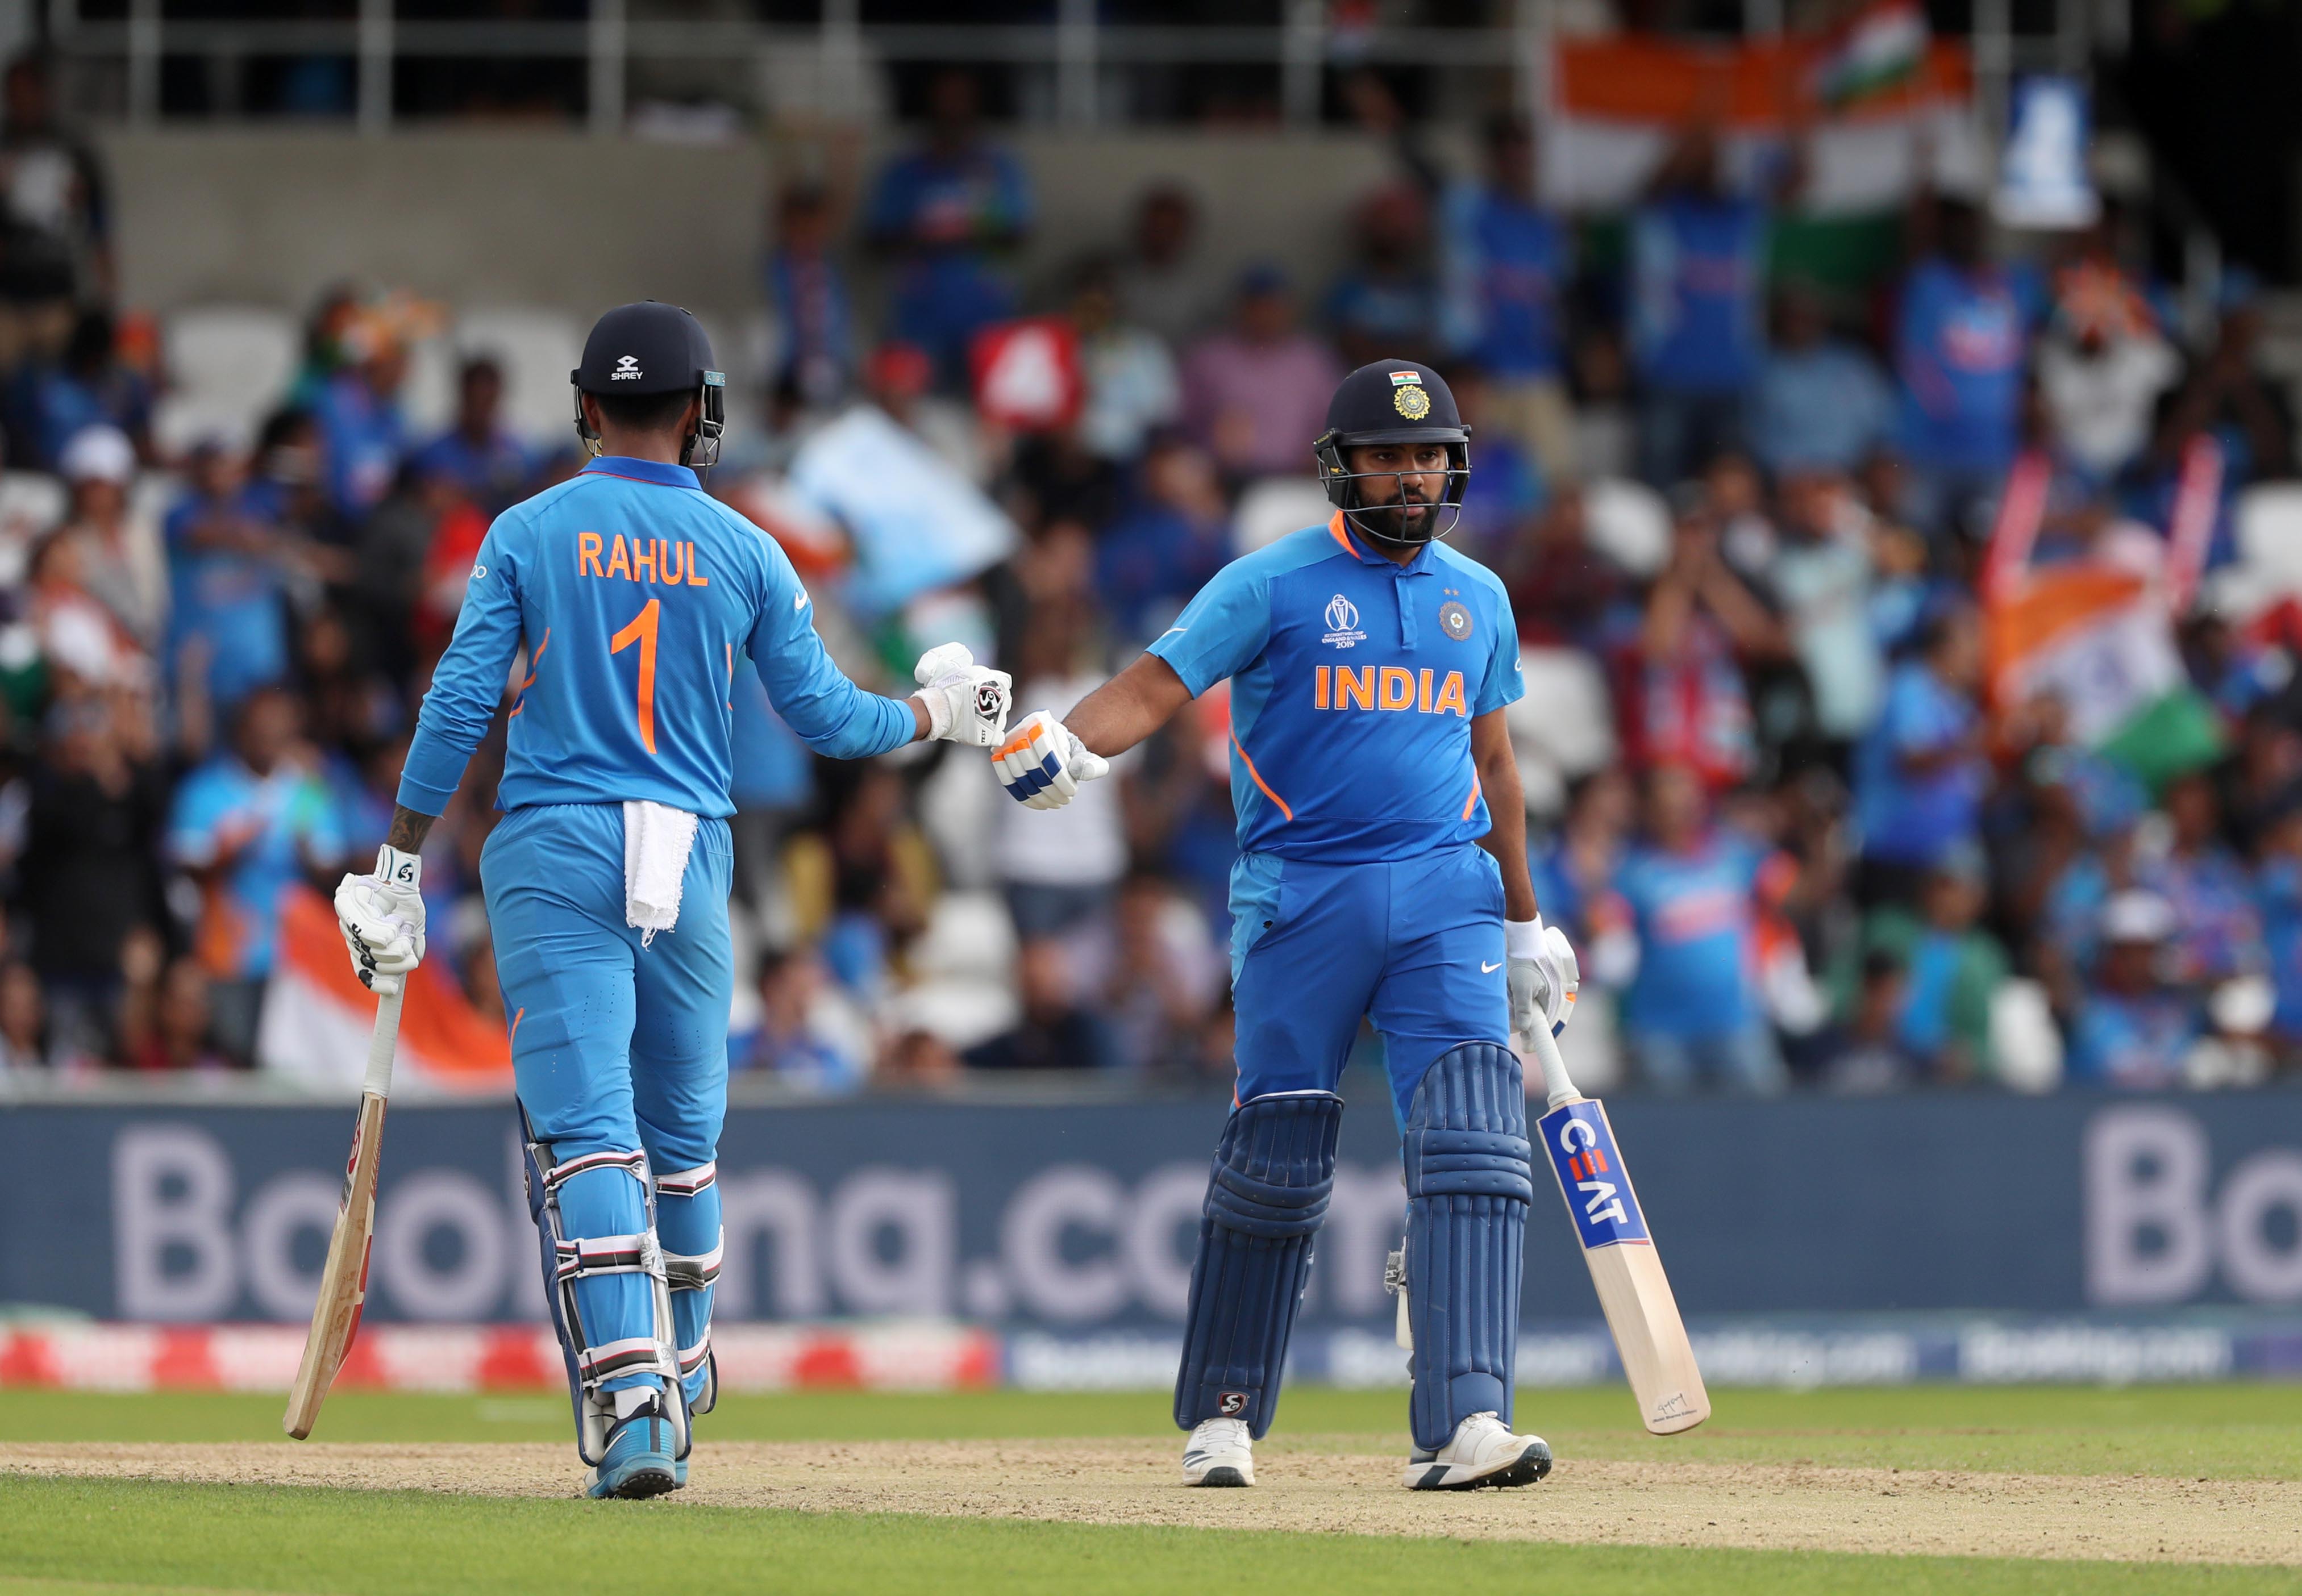 India vs Sri Lanka Live Cricket Score, World Cup 2019 In Pictures - IND vs SL Live ...4051 x 2809